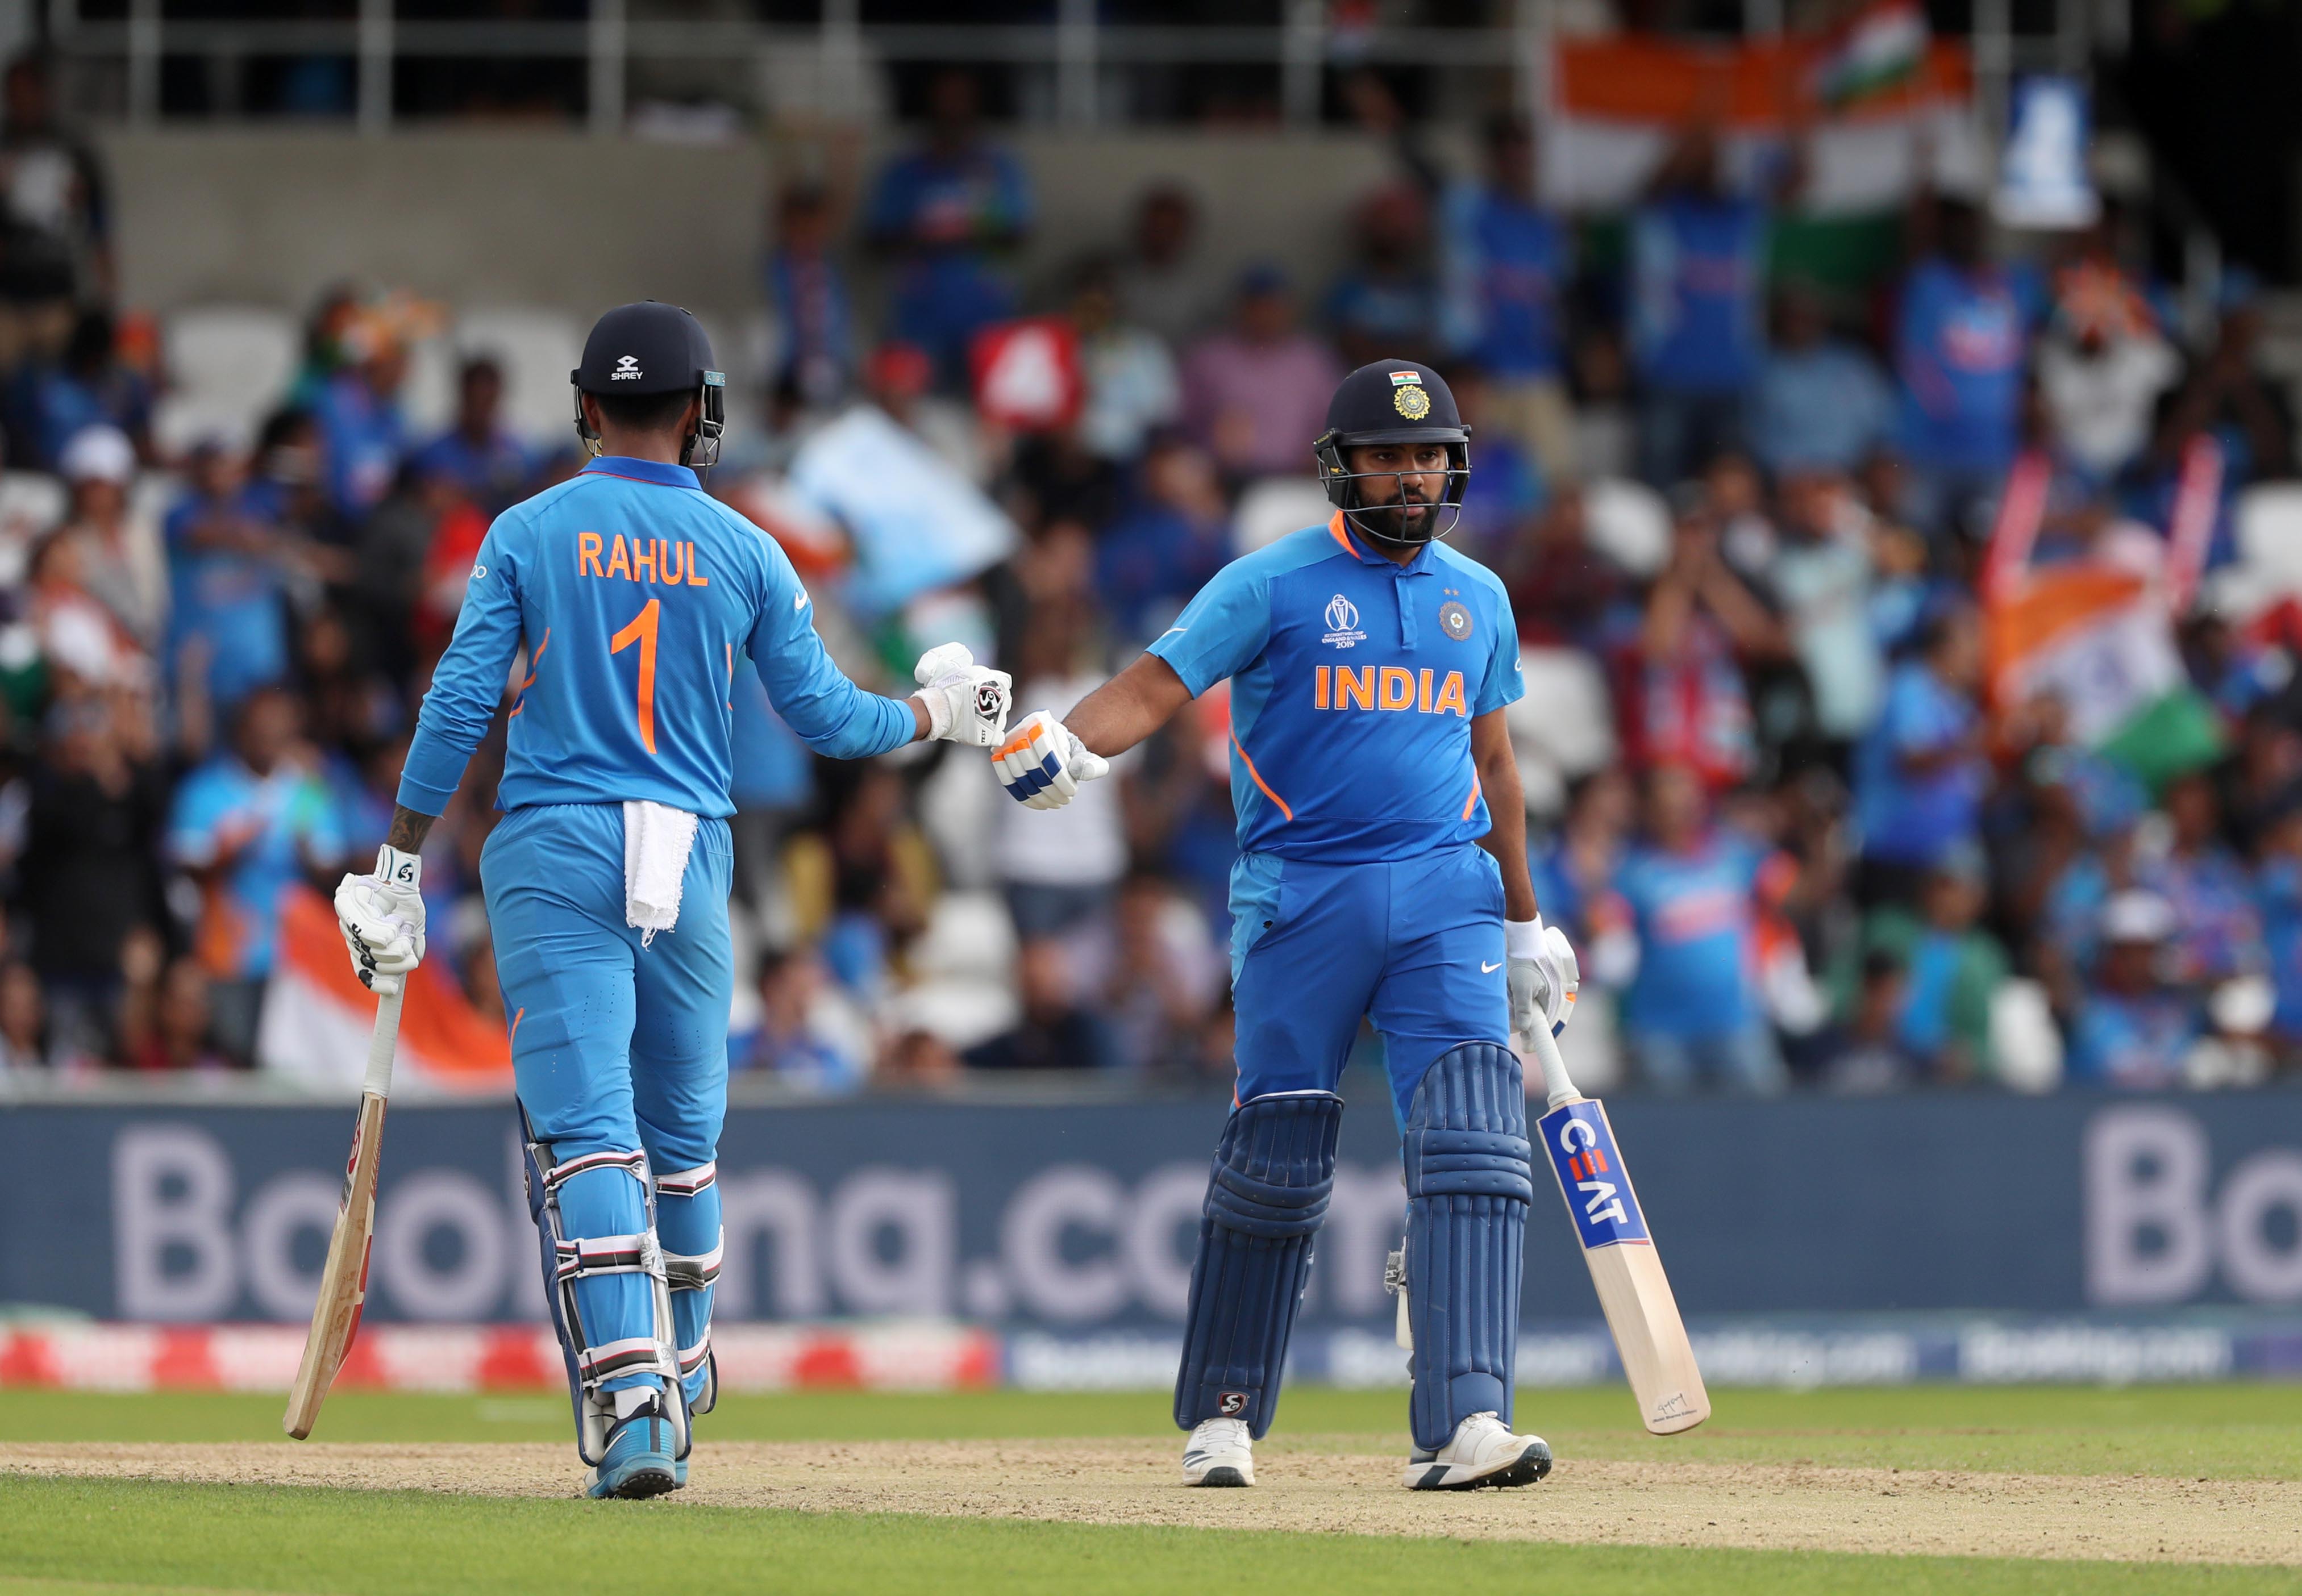 India vs Sri Lanka Live Cricket Score, World Cup 2019 In Pictures - IND vs SL Live ...4051 x 2809